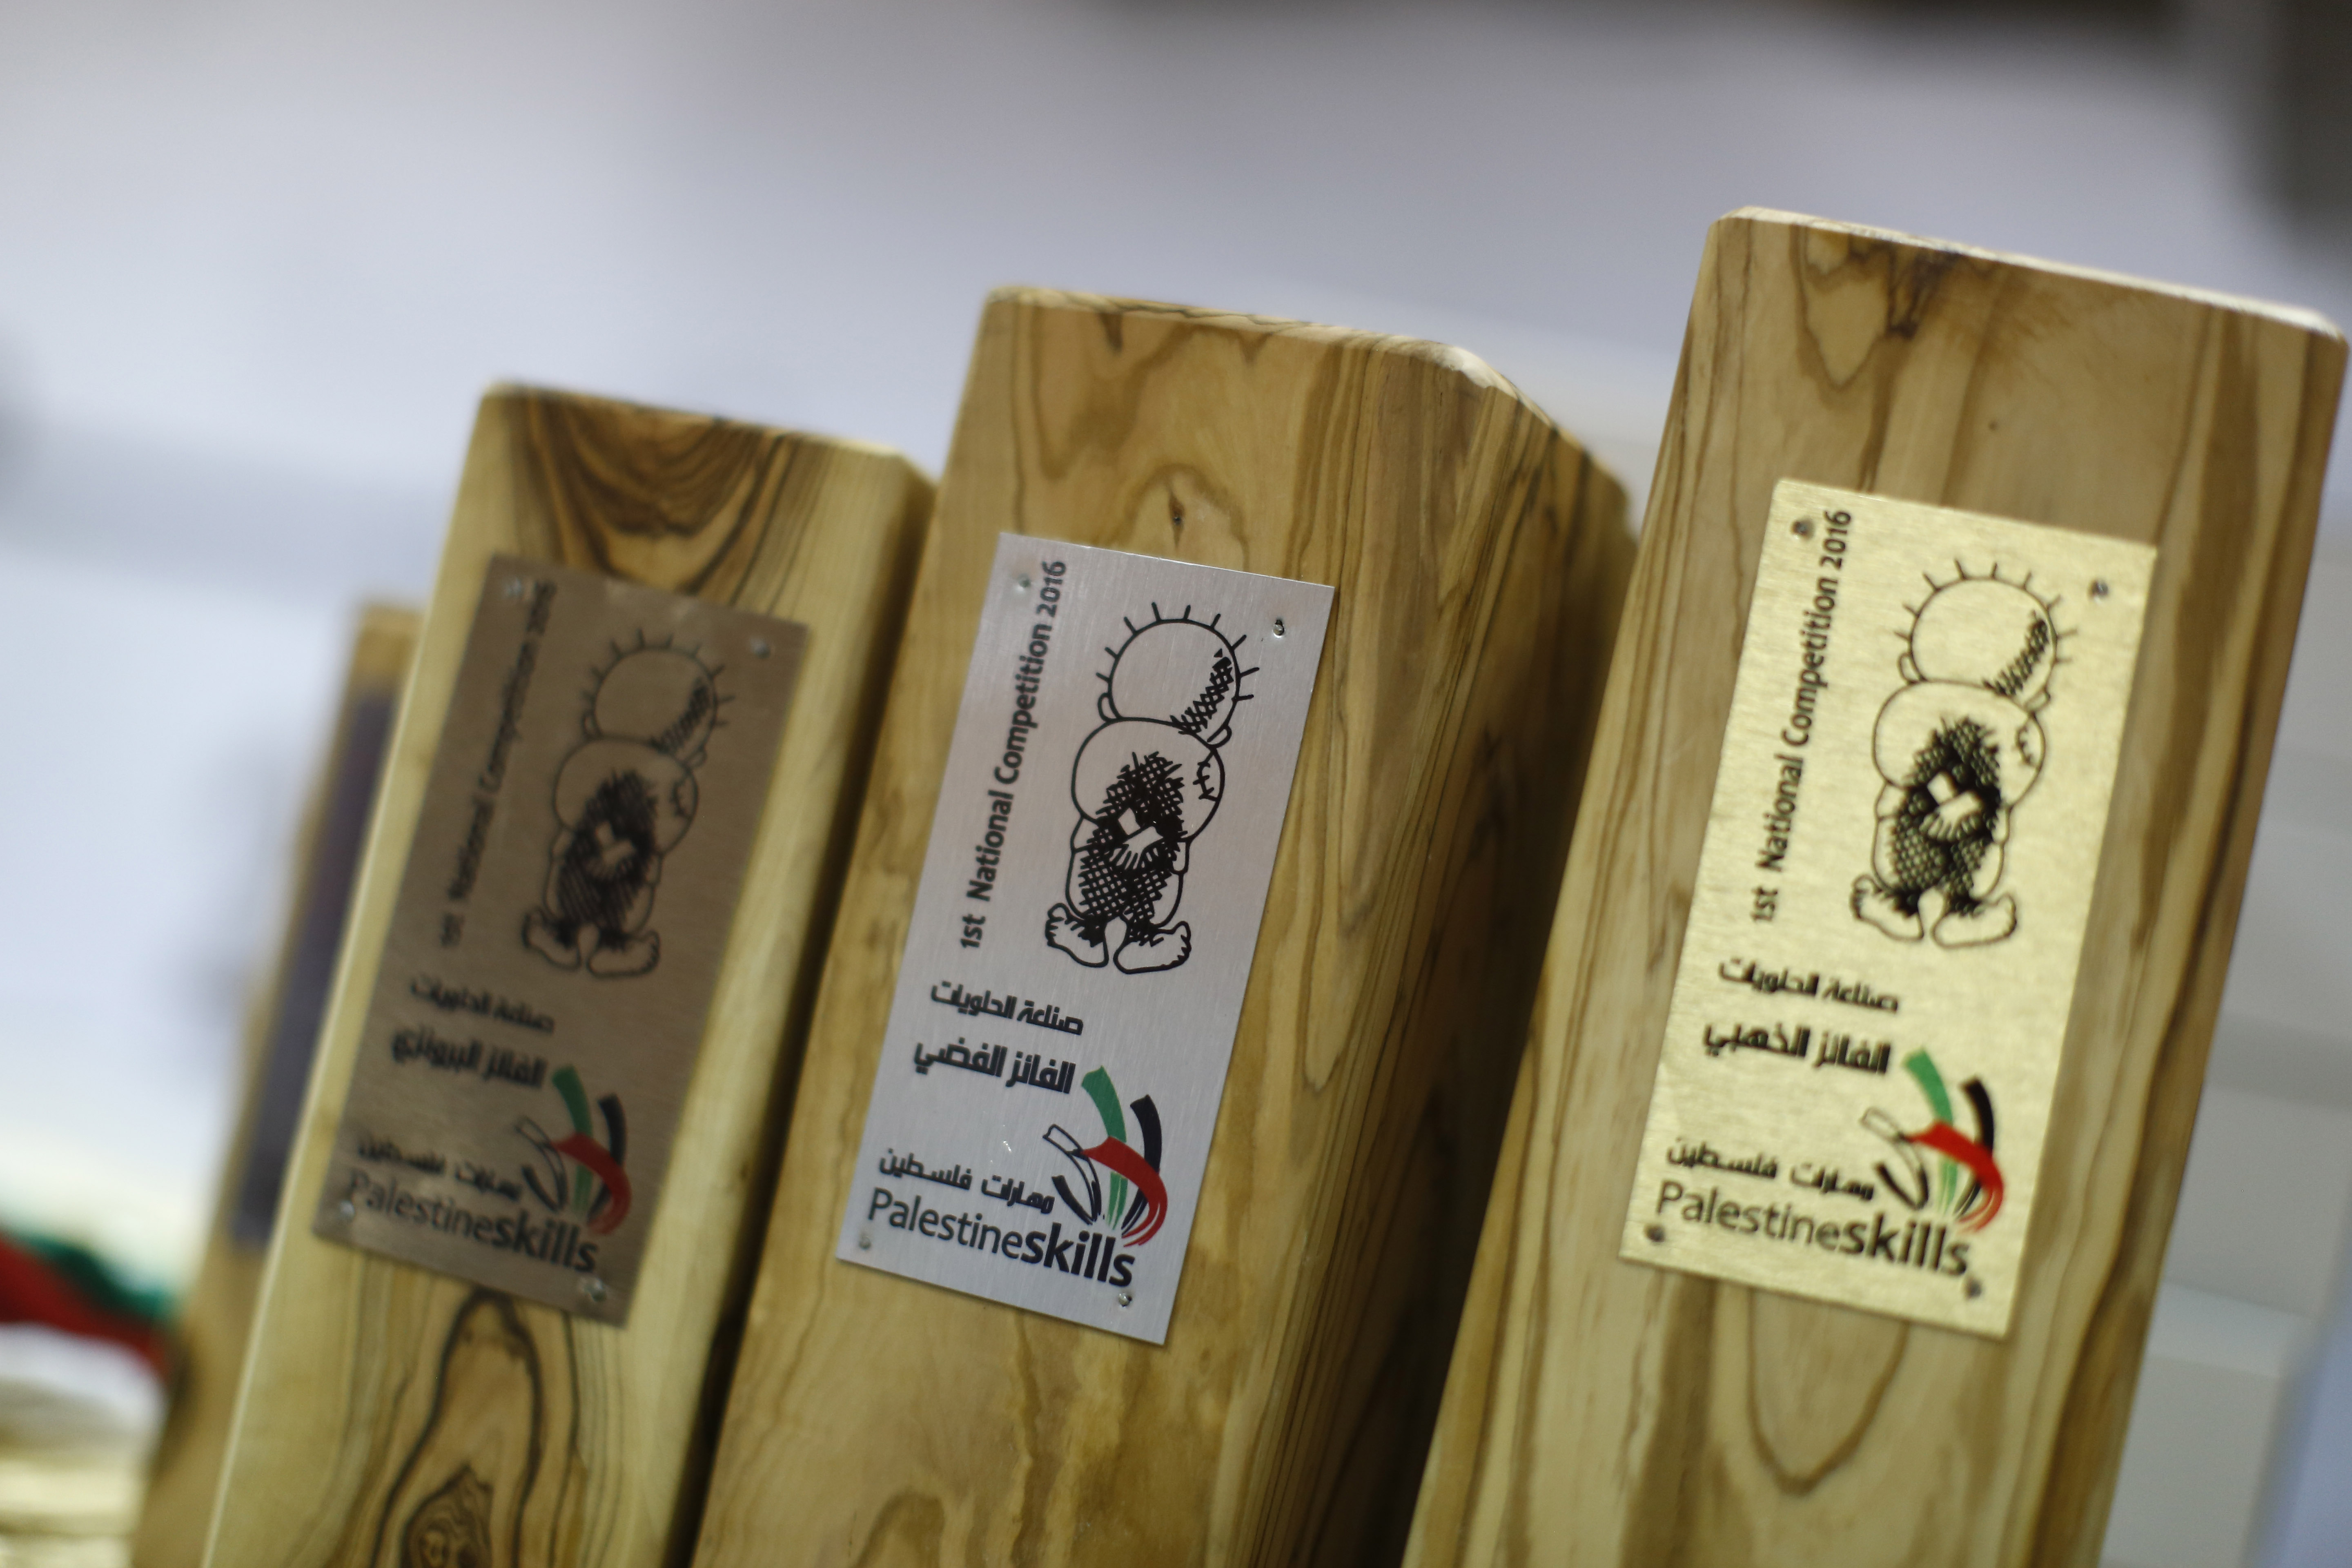 the prize trophies showing Handala.jpg